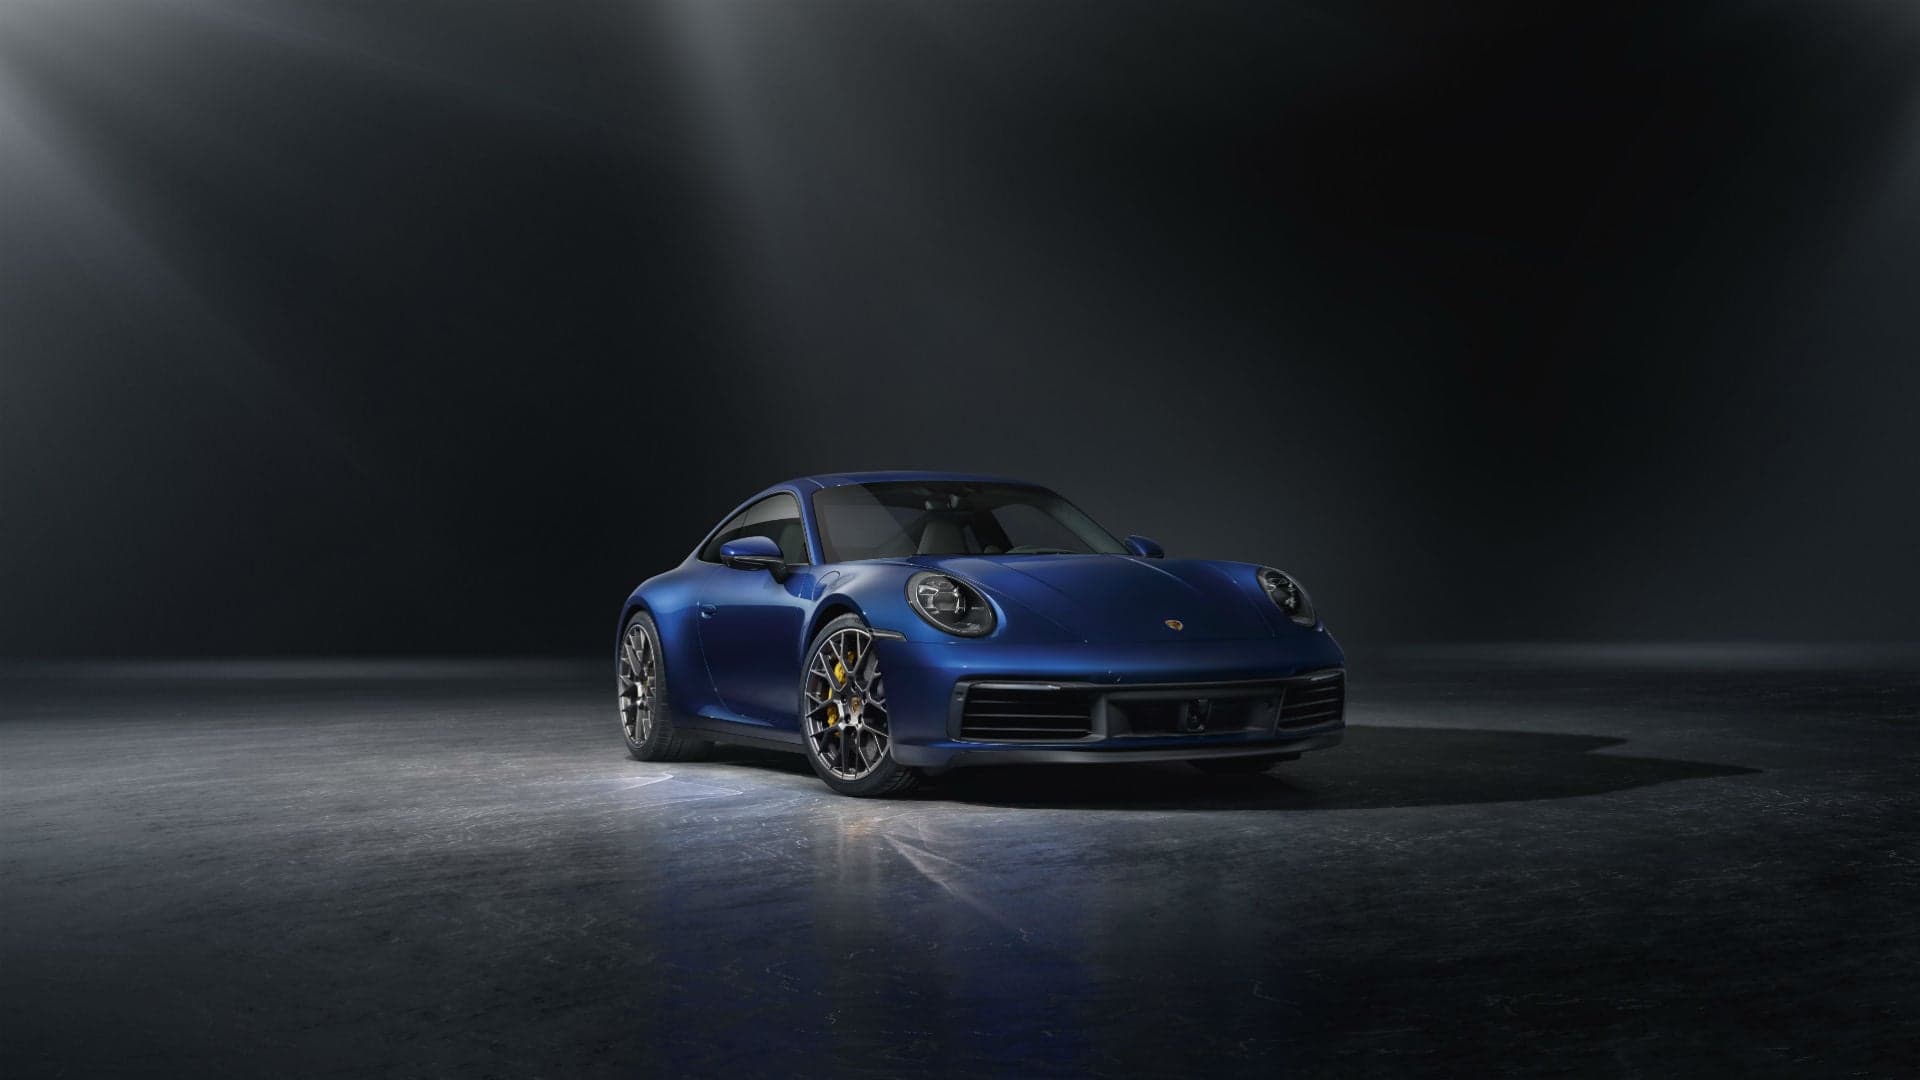 Porsche Executive Says 911 Carrera-Based SUV Is a ‘Good Idea’